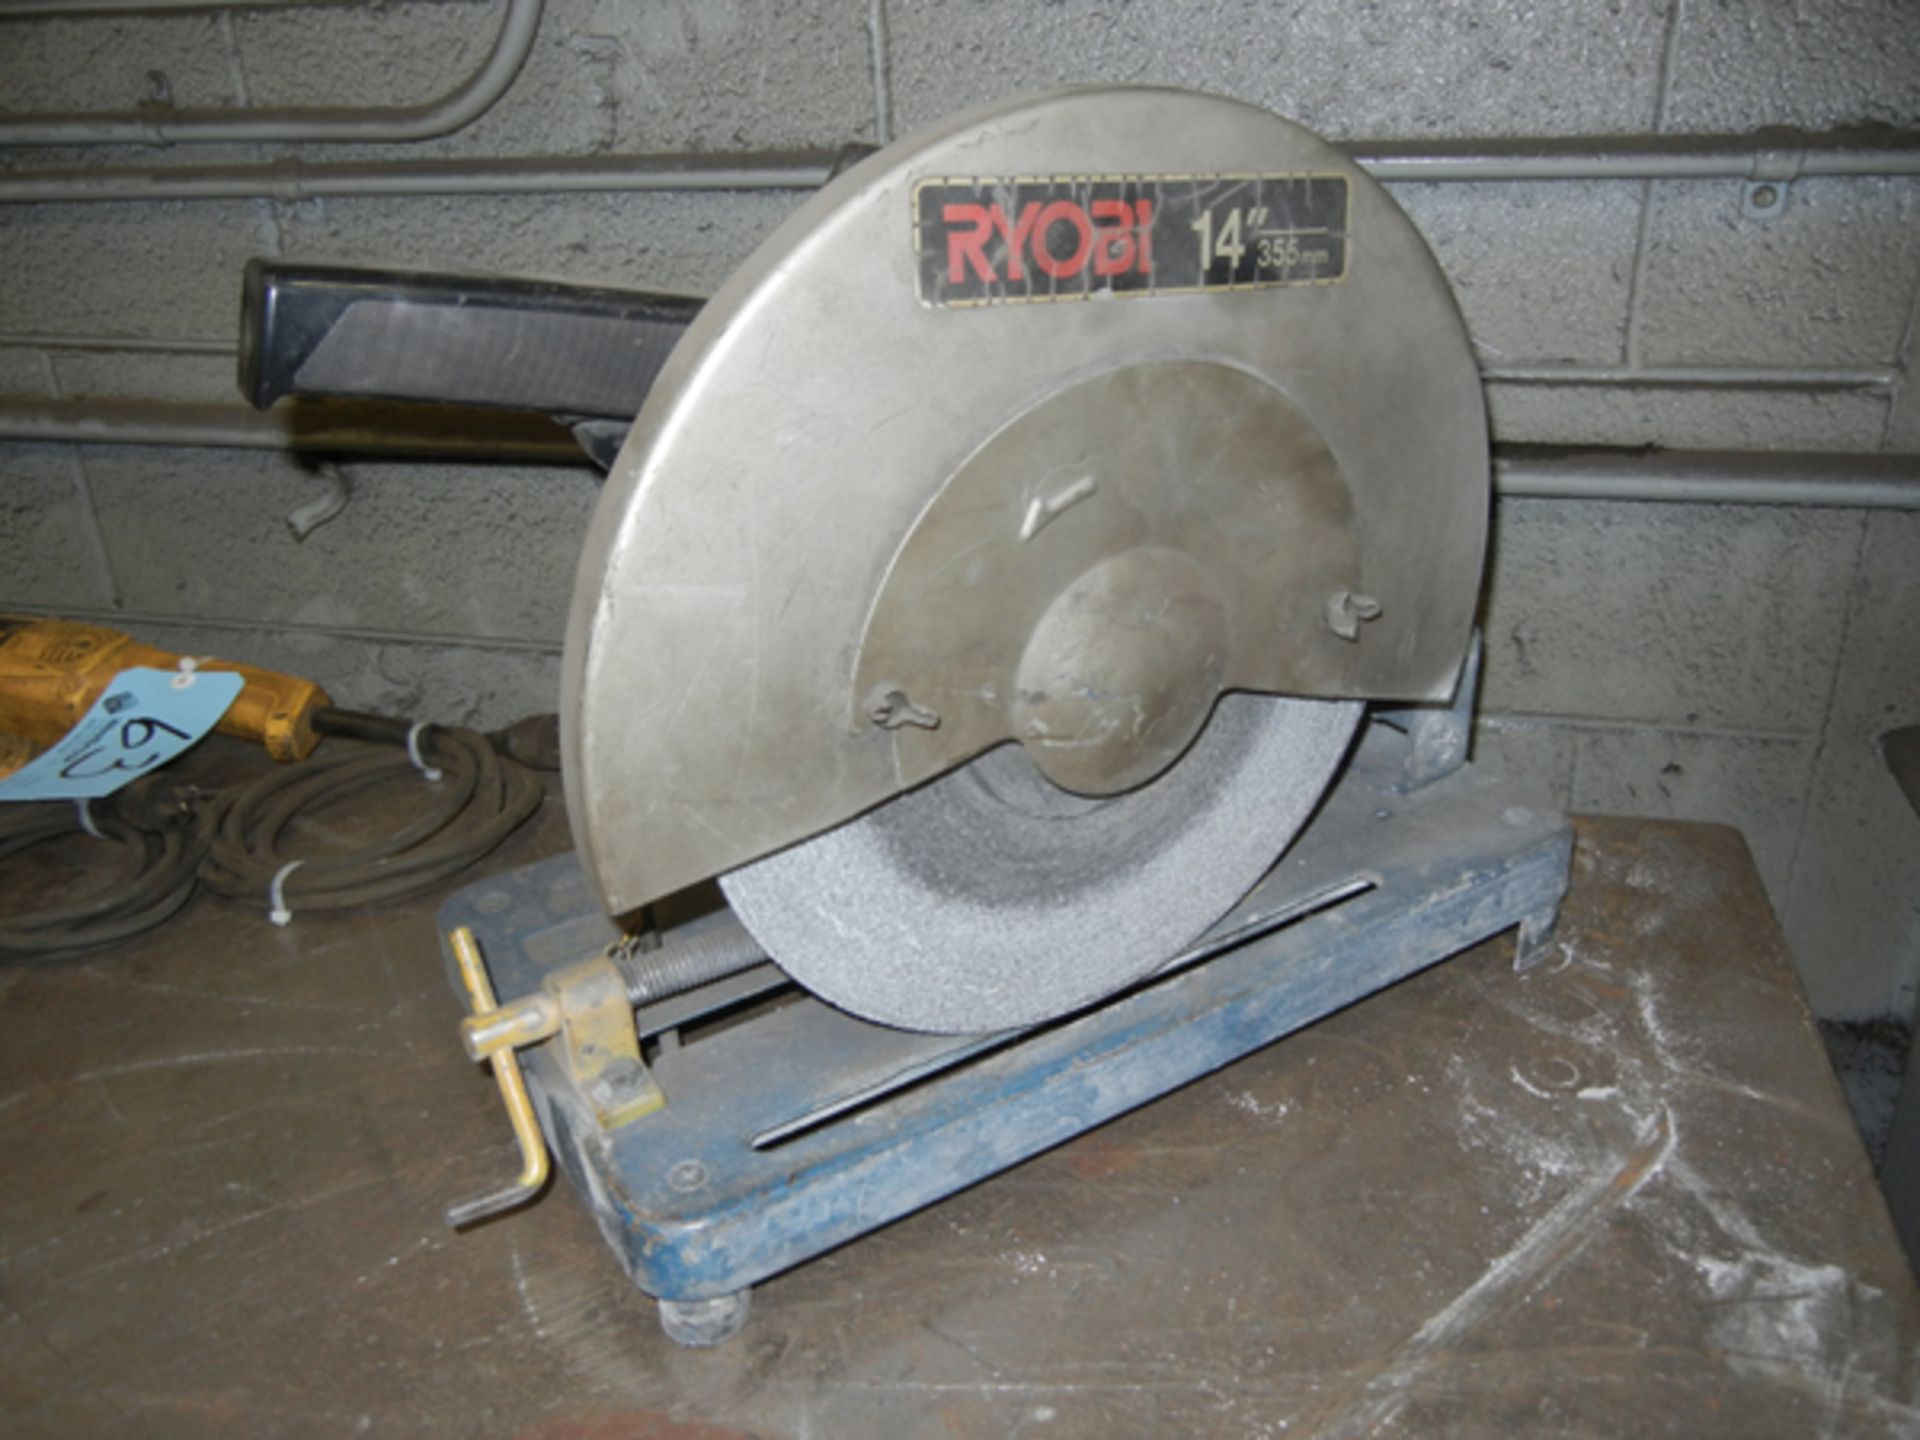 RYBOBI 14" Abrasive Cut Off Saw